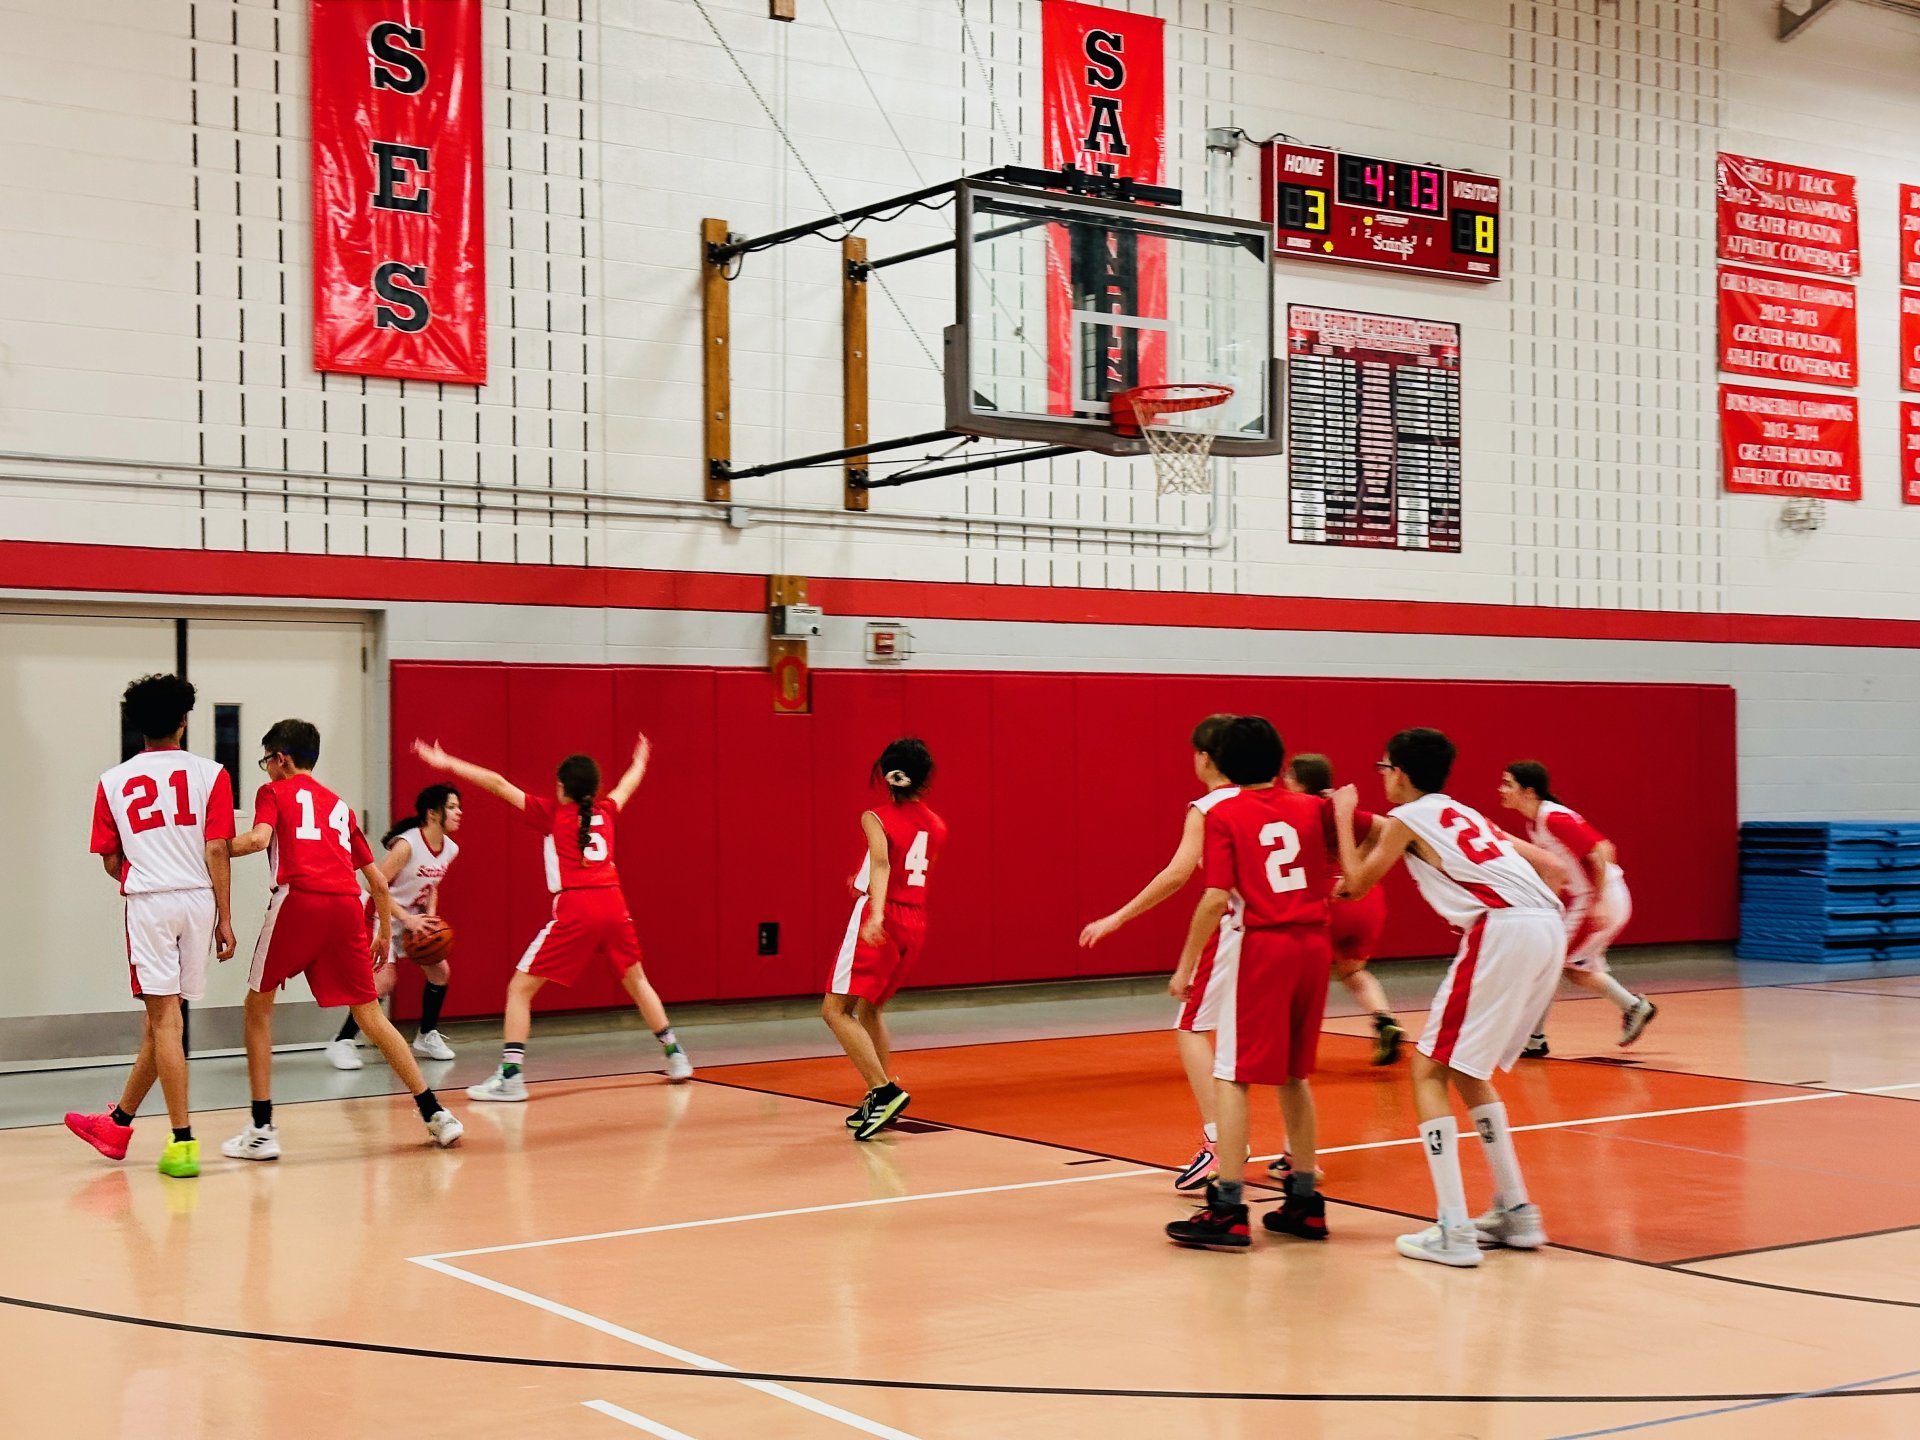 Action shot of students playing basketball